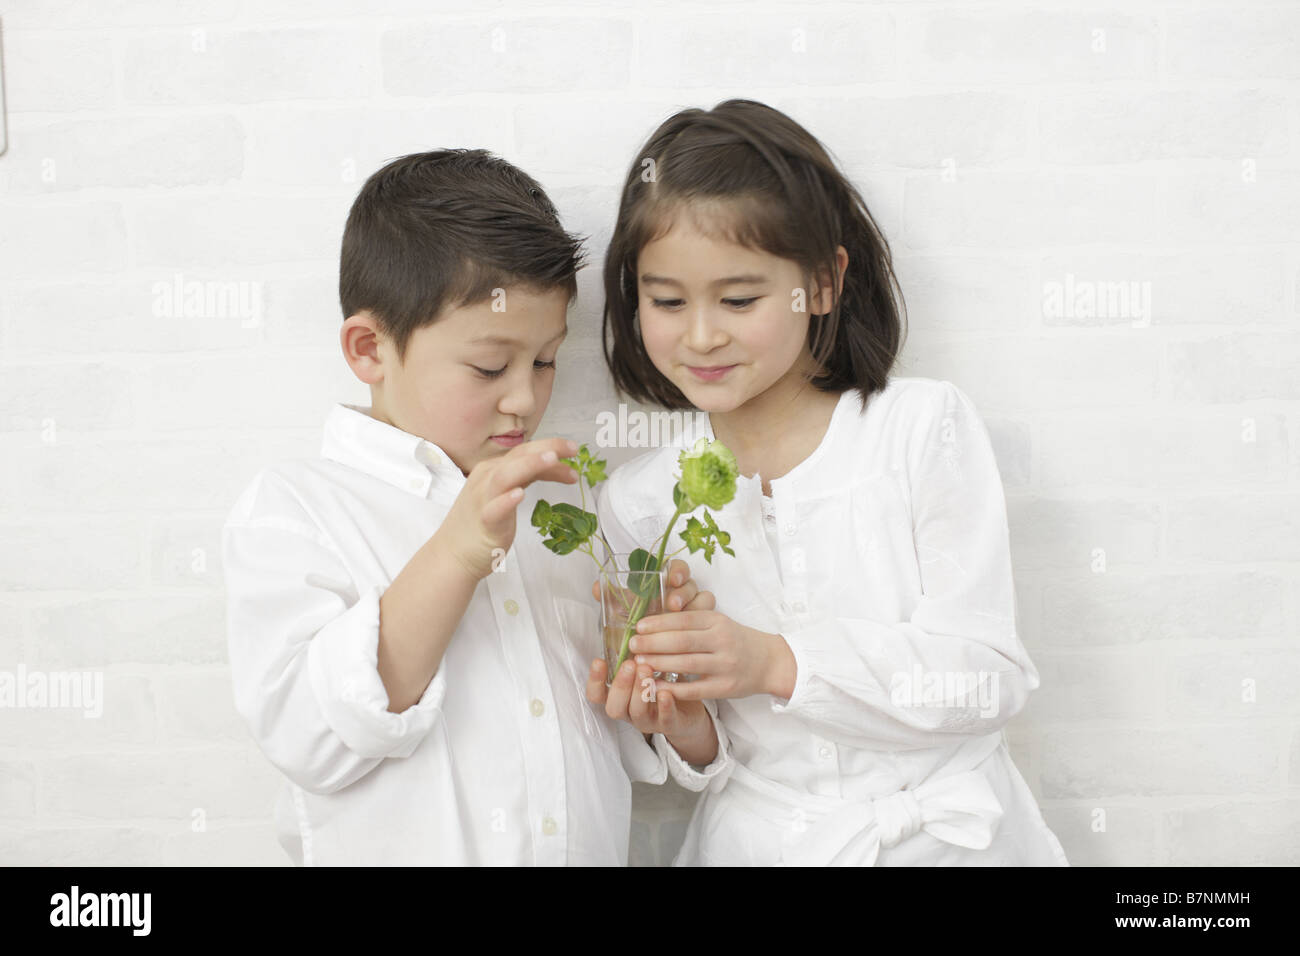 Children holding flowers Stock Photo